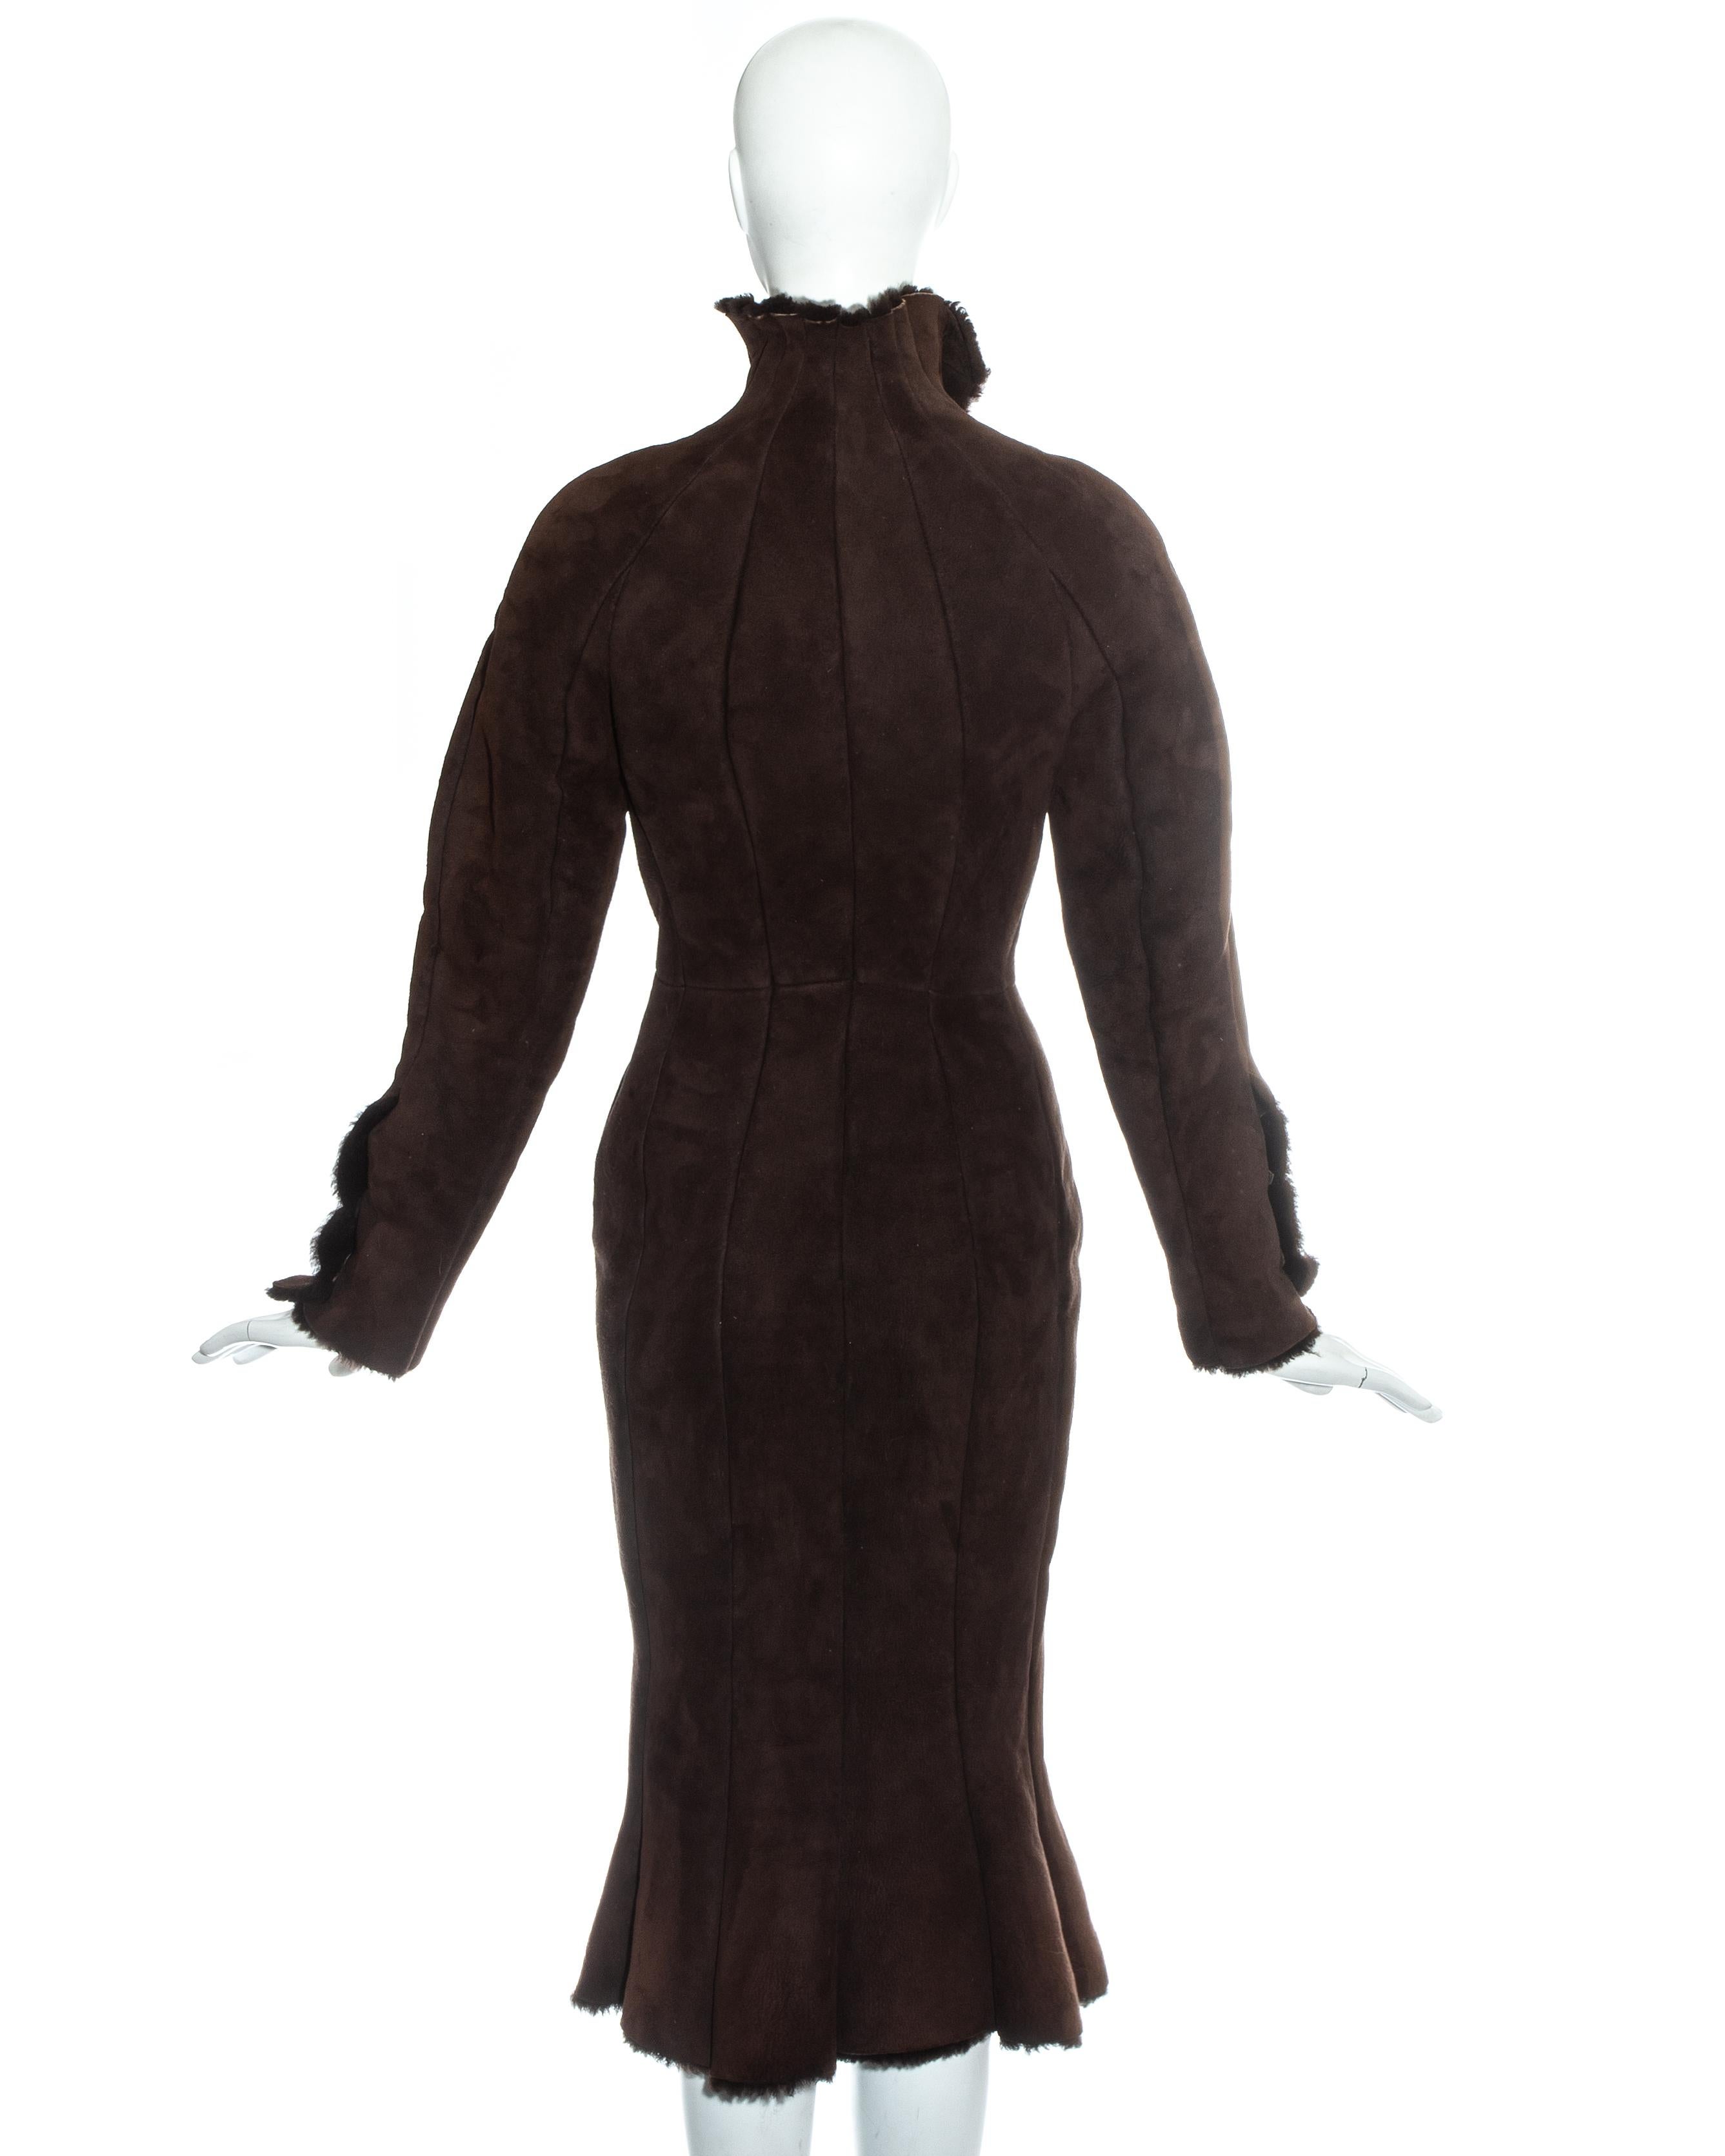 Women's Vivienne Westwood brown shearling coat dress, fw 1992 For Sale